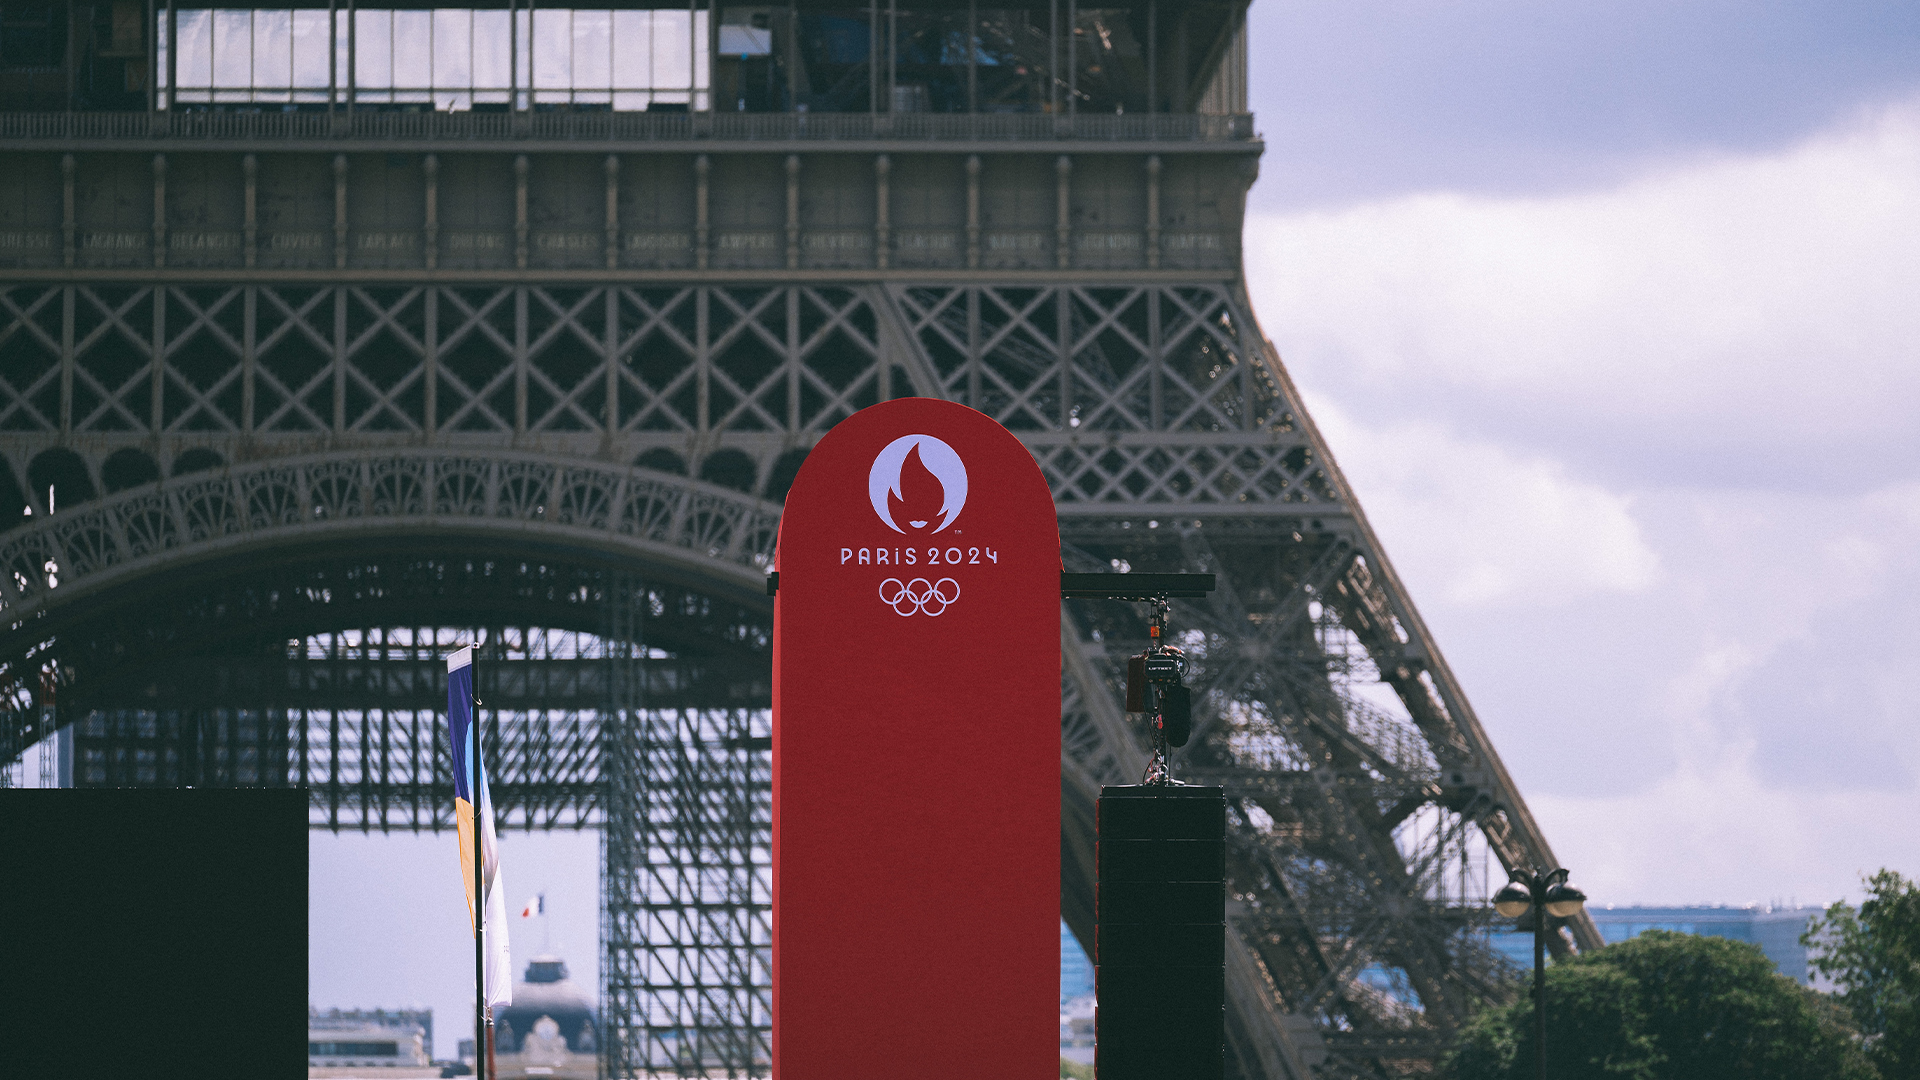 Eiffel Tower and Paris 2024 logo